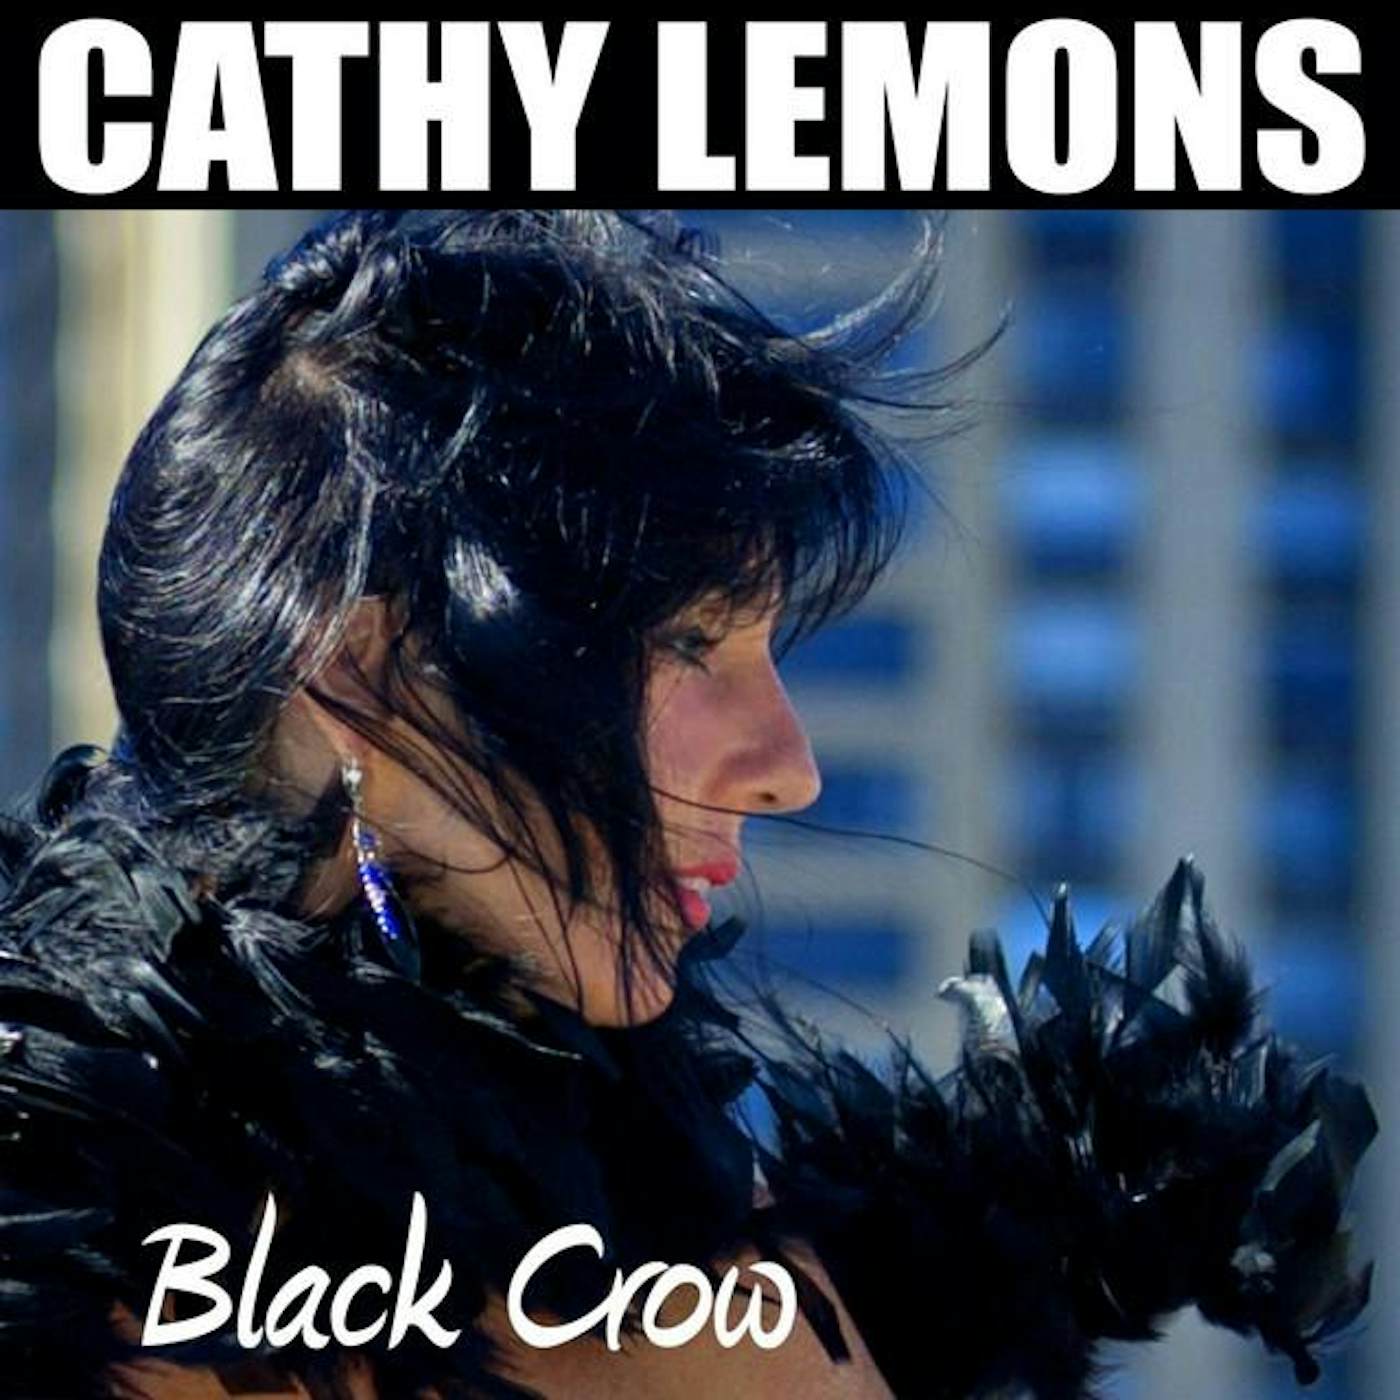 Cathy Lemons